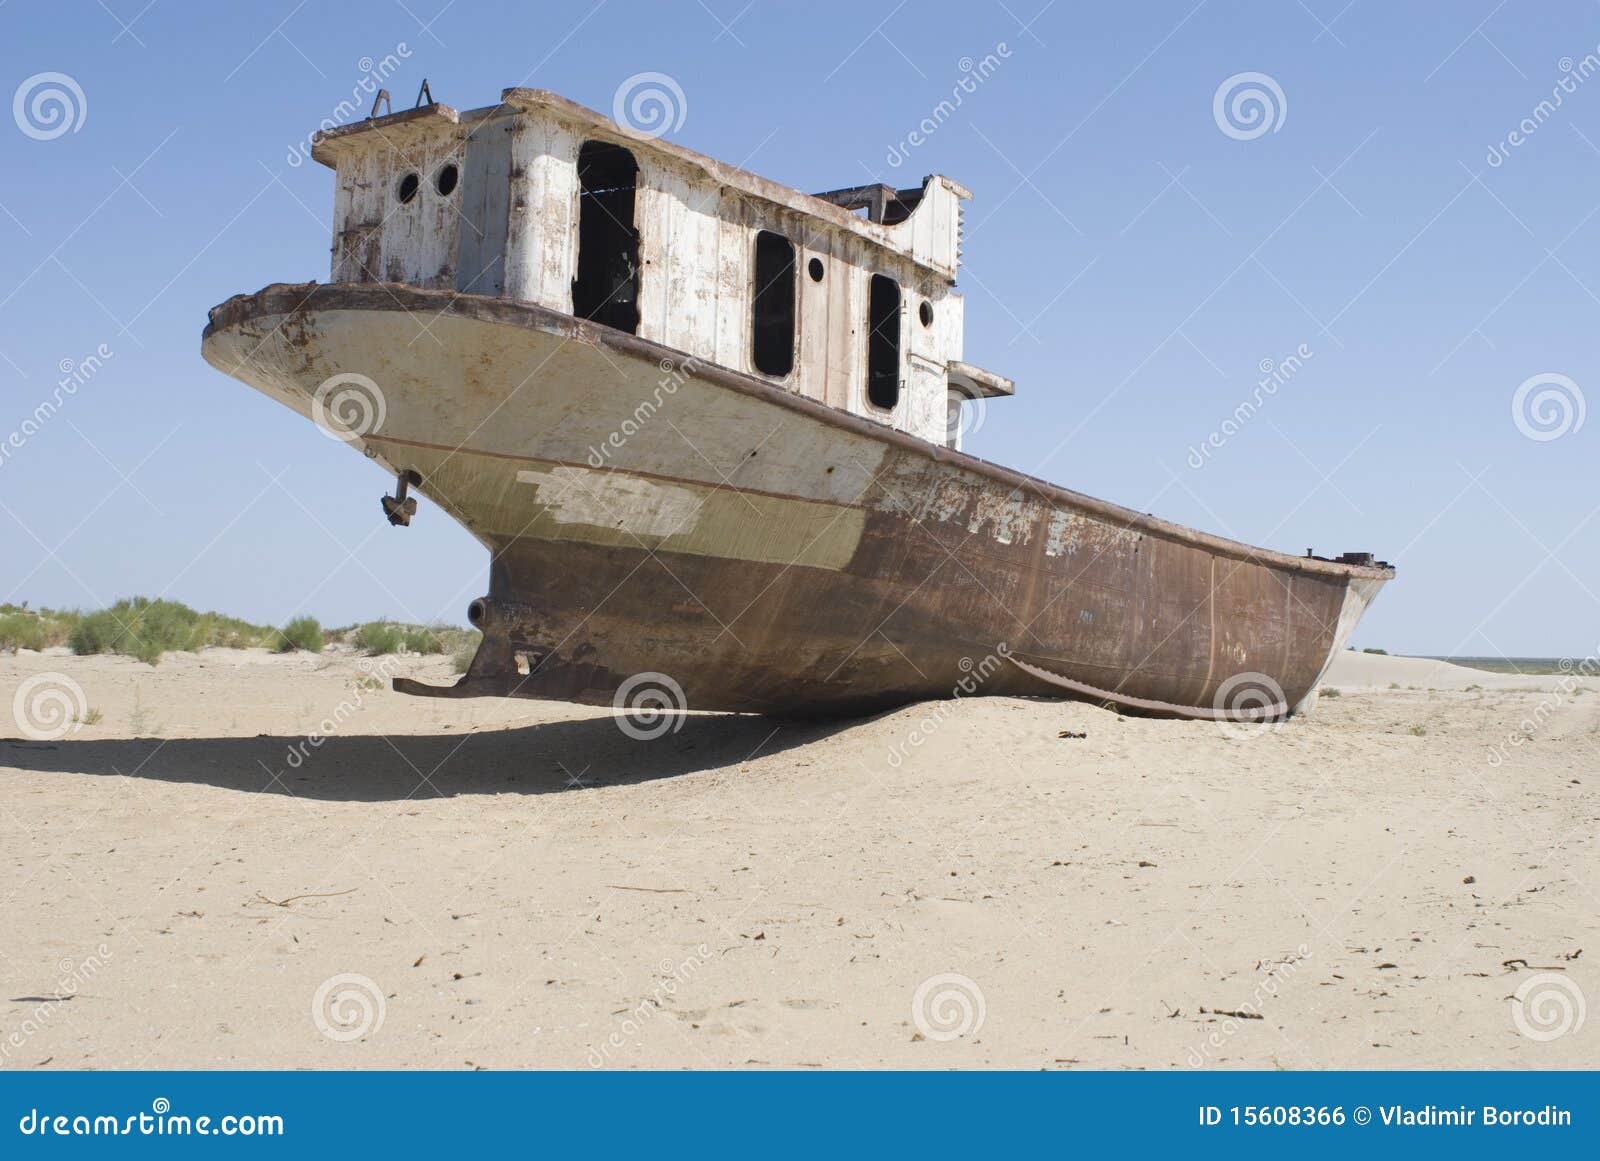 boats cemetary in aral sea area